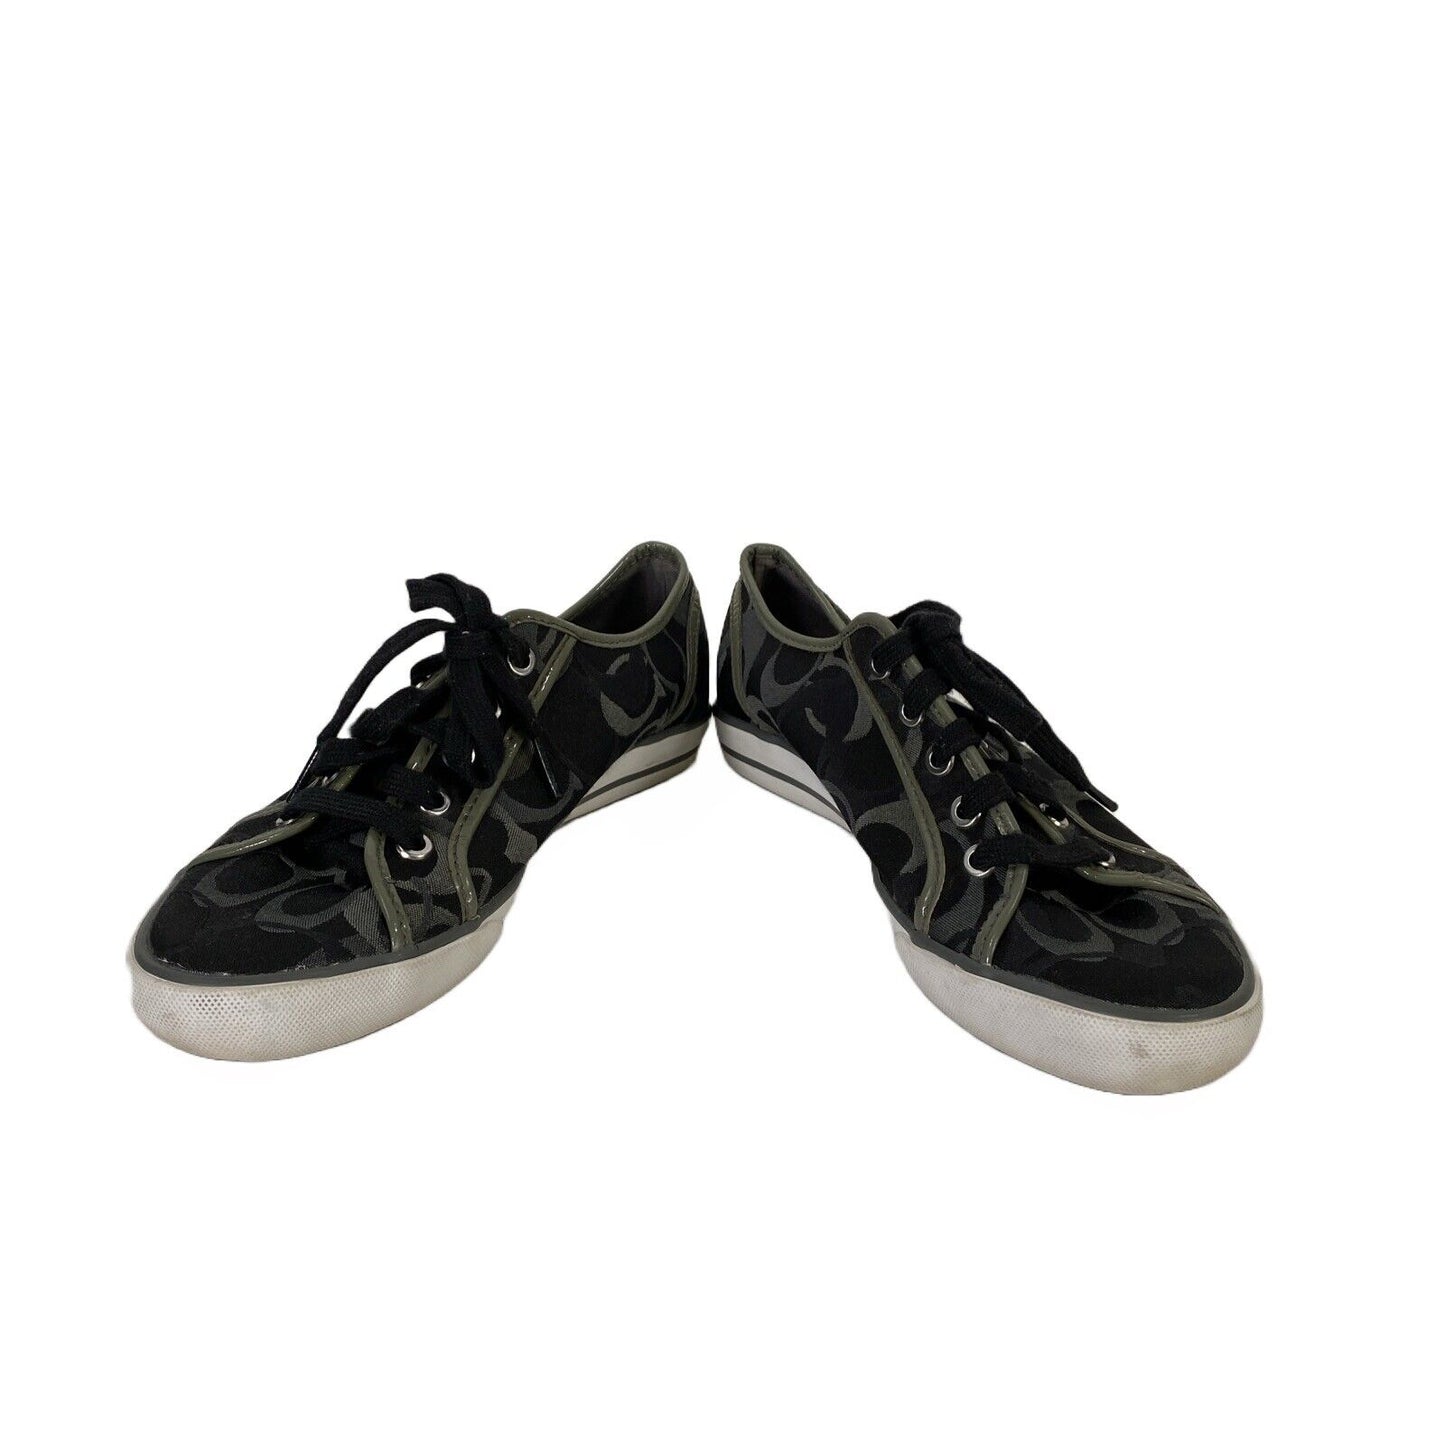 Coach Women's Black Signature Dee Canvas Lace Up Sneakers - 7.5